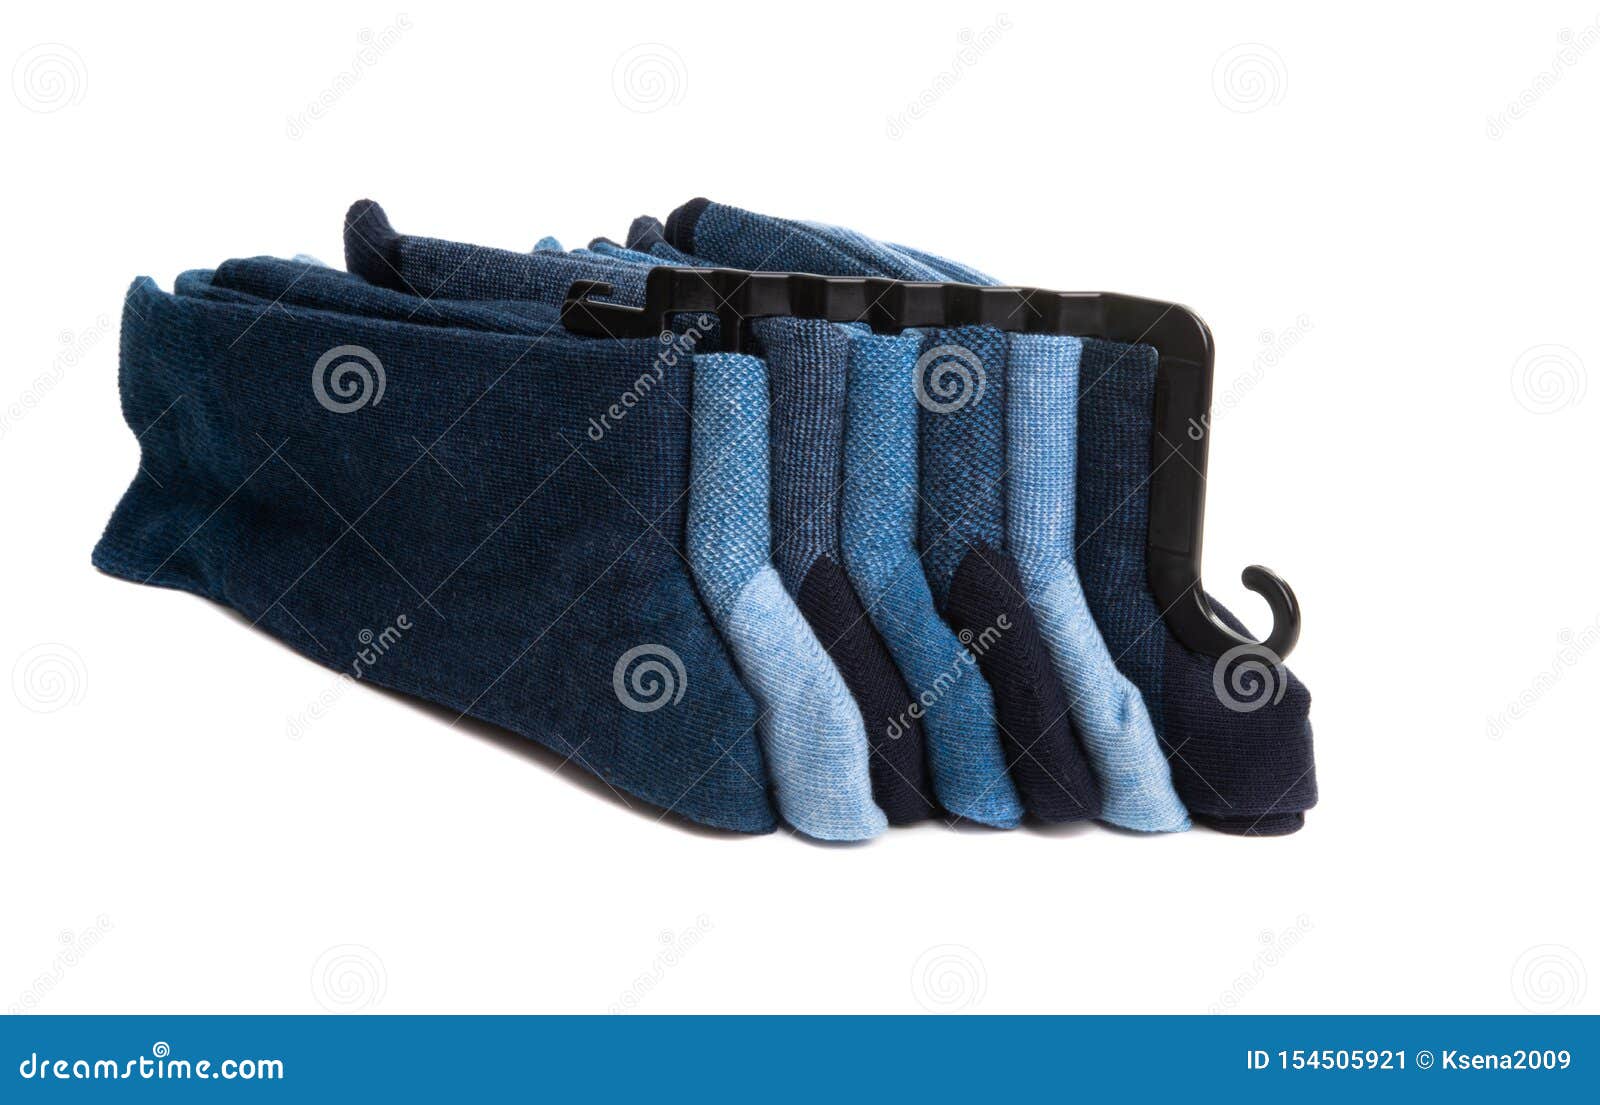 Set of Men`s Socks Isolated Stock Image - Image of macro, black: 154505921